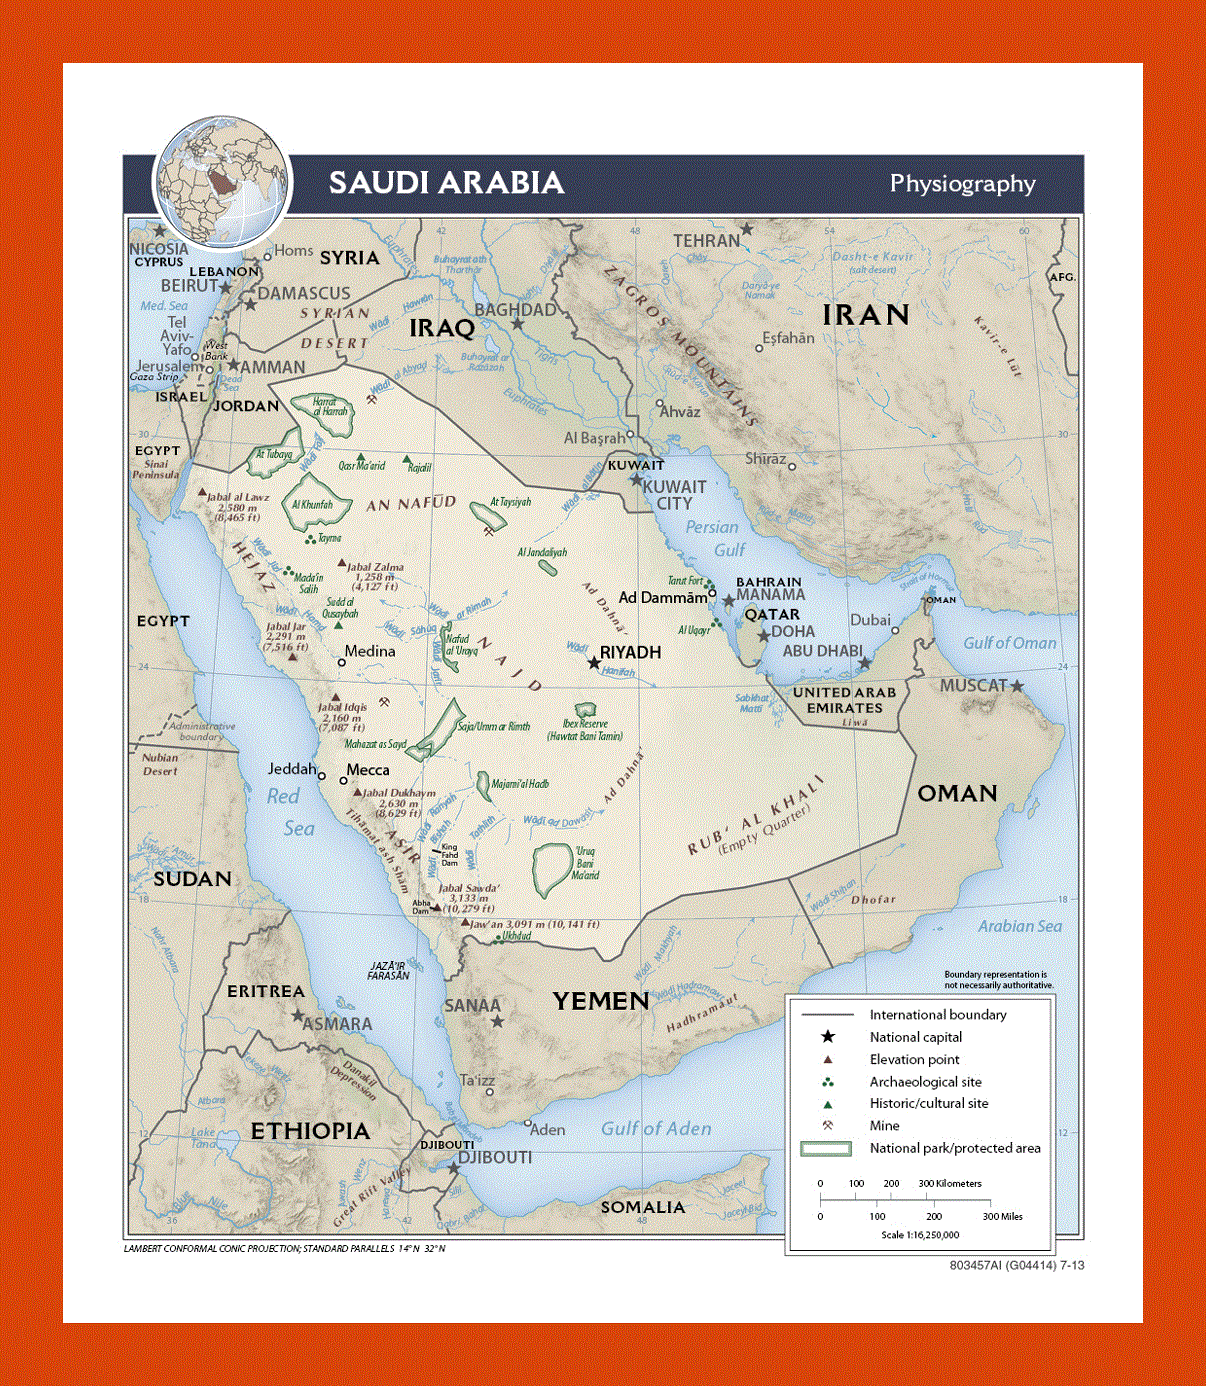 Physiography map of Saudi Arabia - 2013